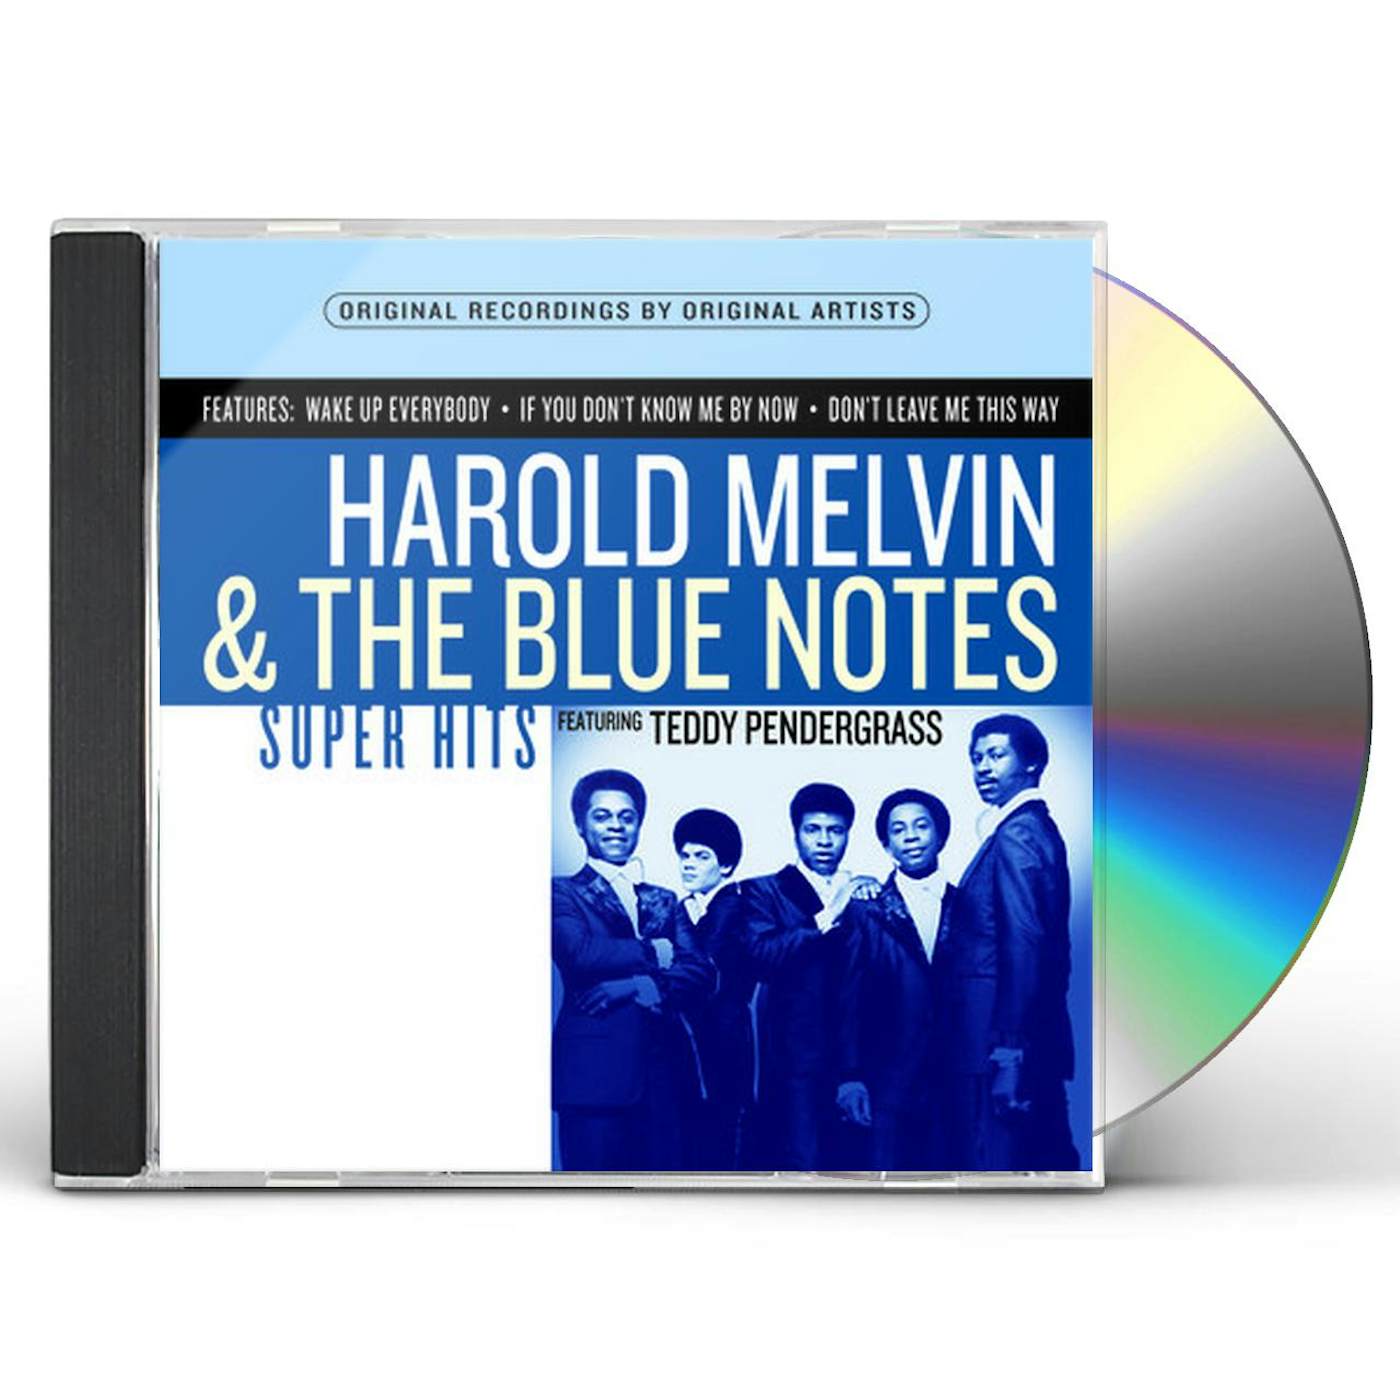 Harold Melvin & The Blue Notes SUPER HITS CD